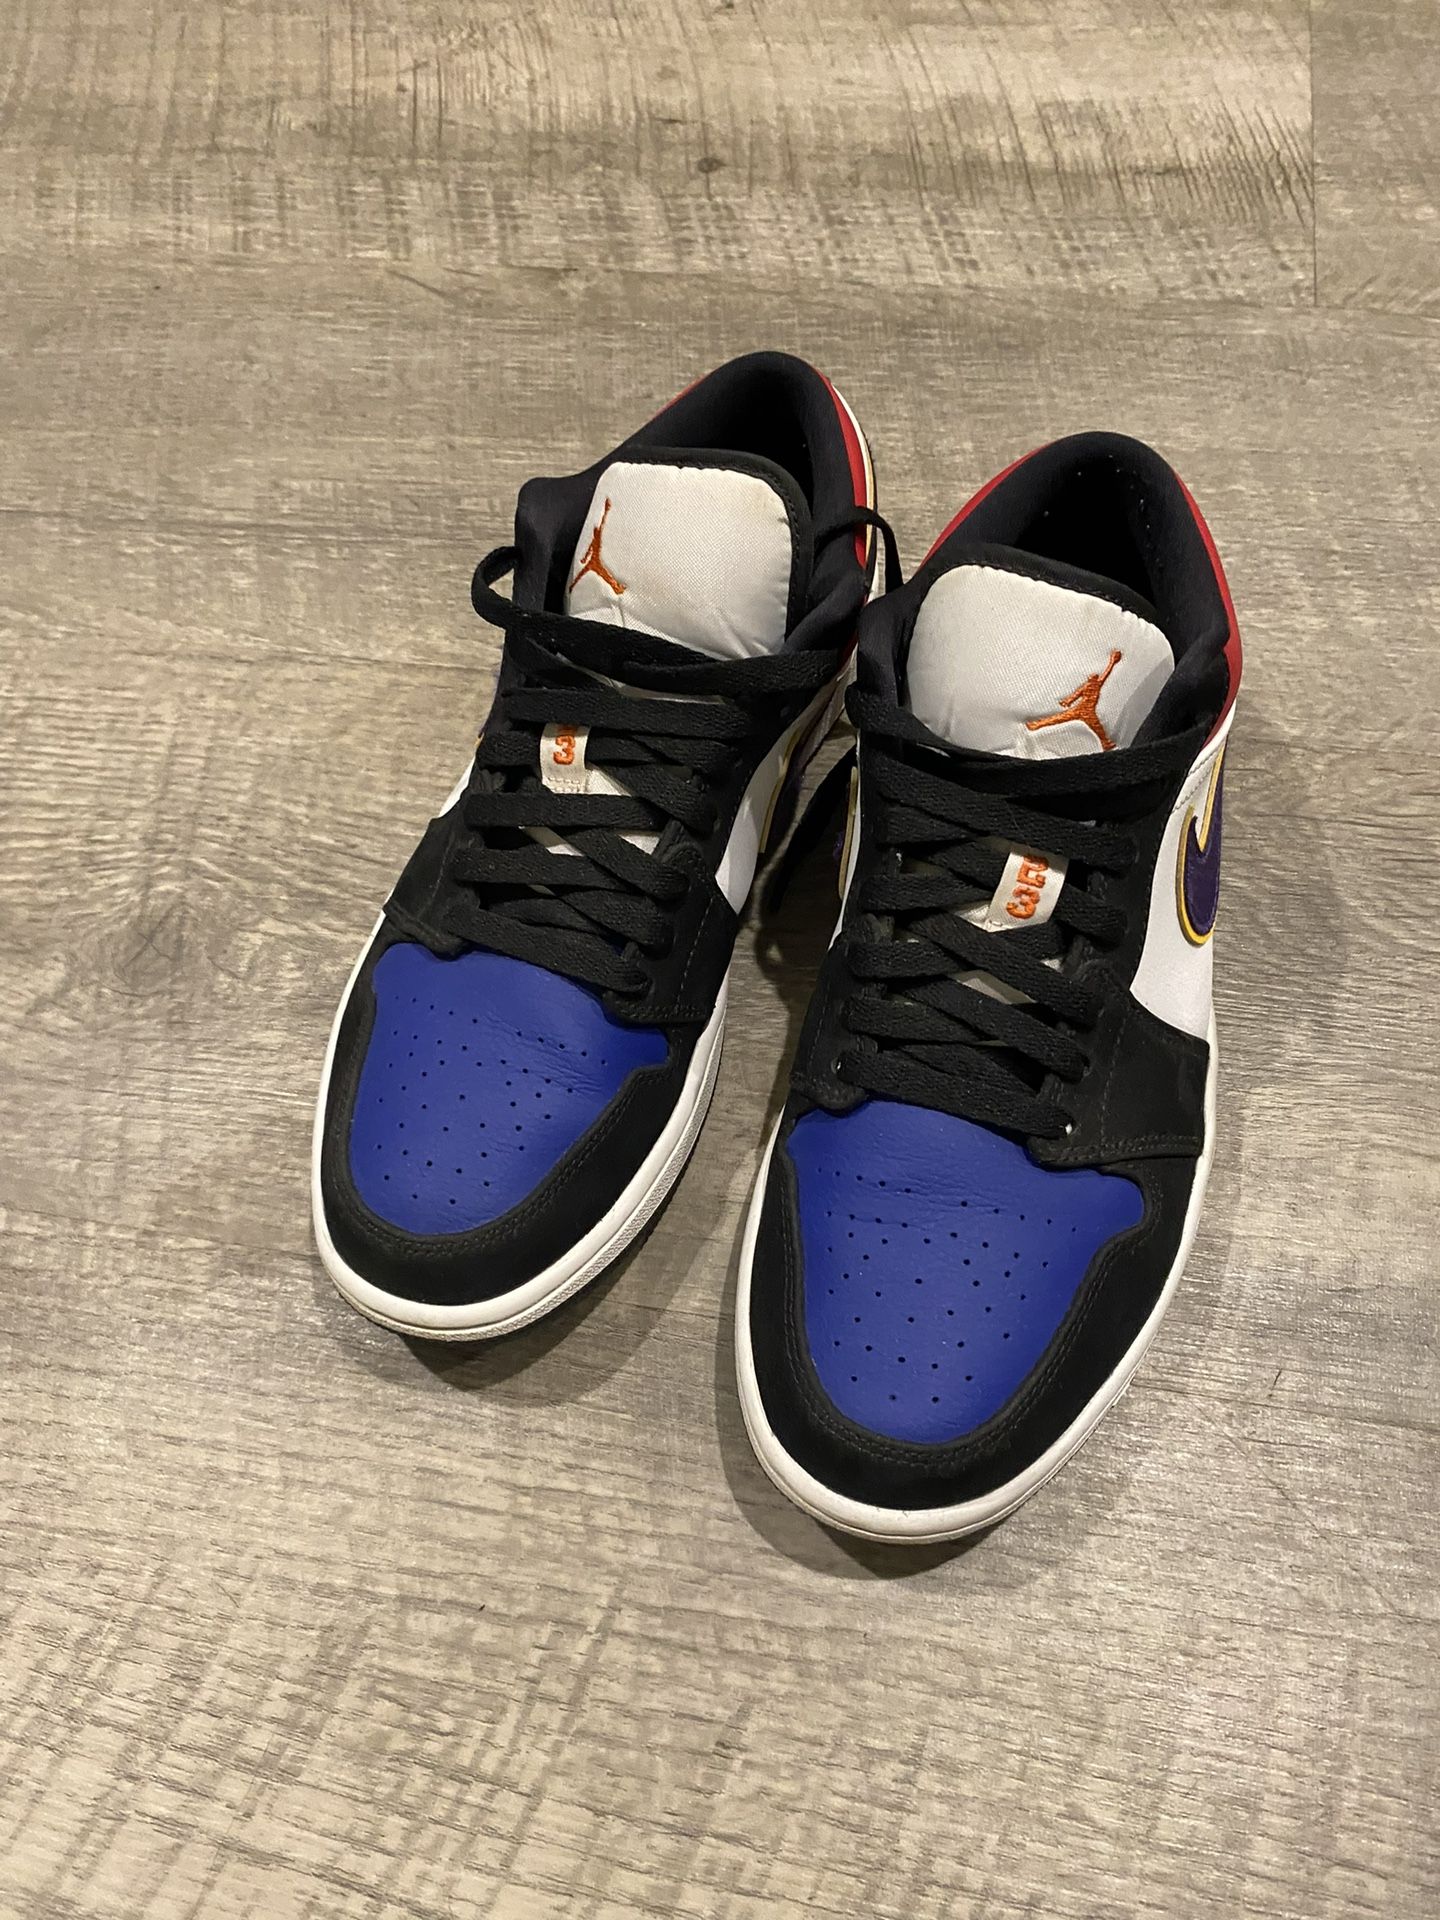 Men’s Jordan Shoes